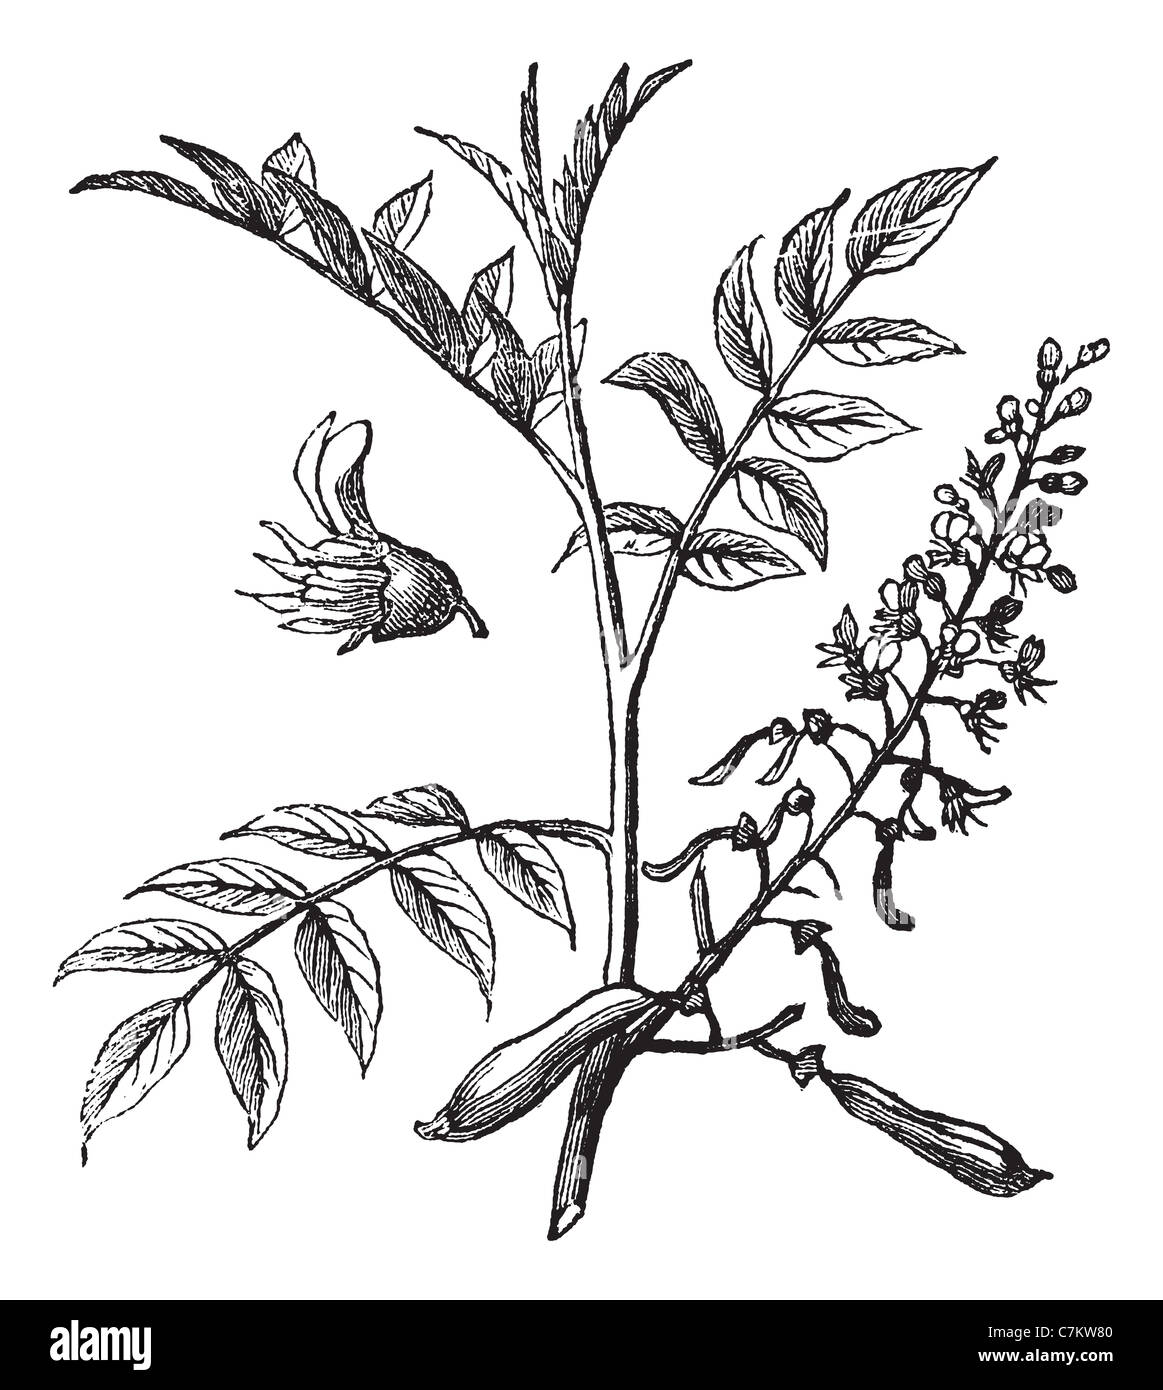 Peru Balsam or Myroxylon peruiferum, vintage engraved illustration. Trousset encyclopedia (1886 - 1891). Stock Photo